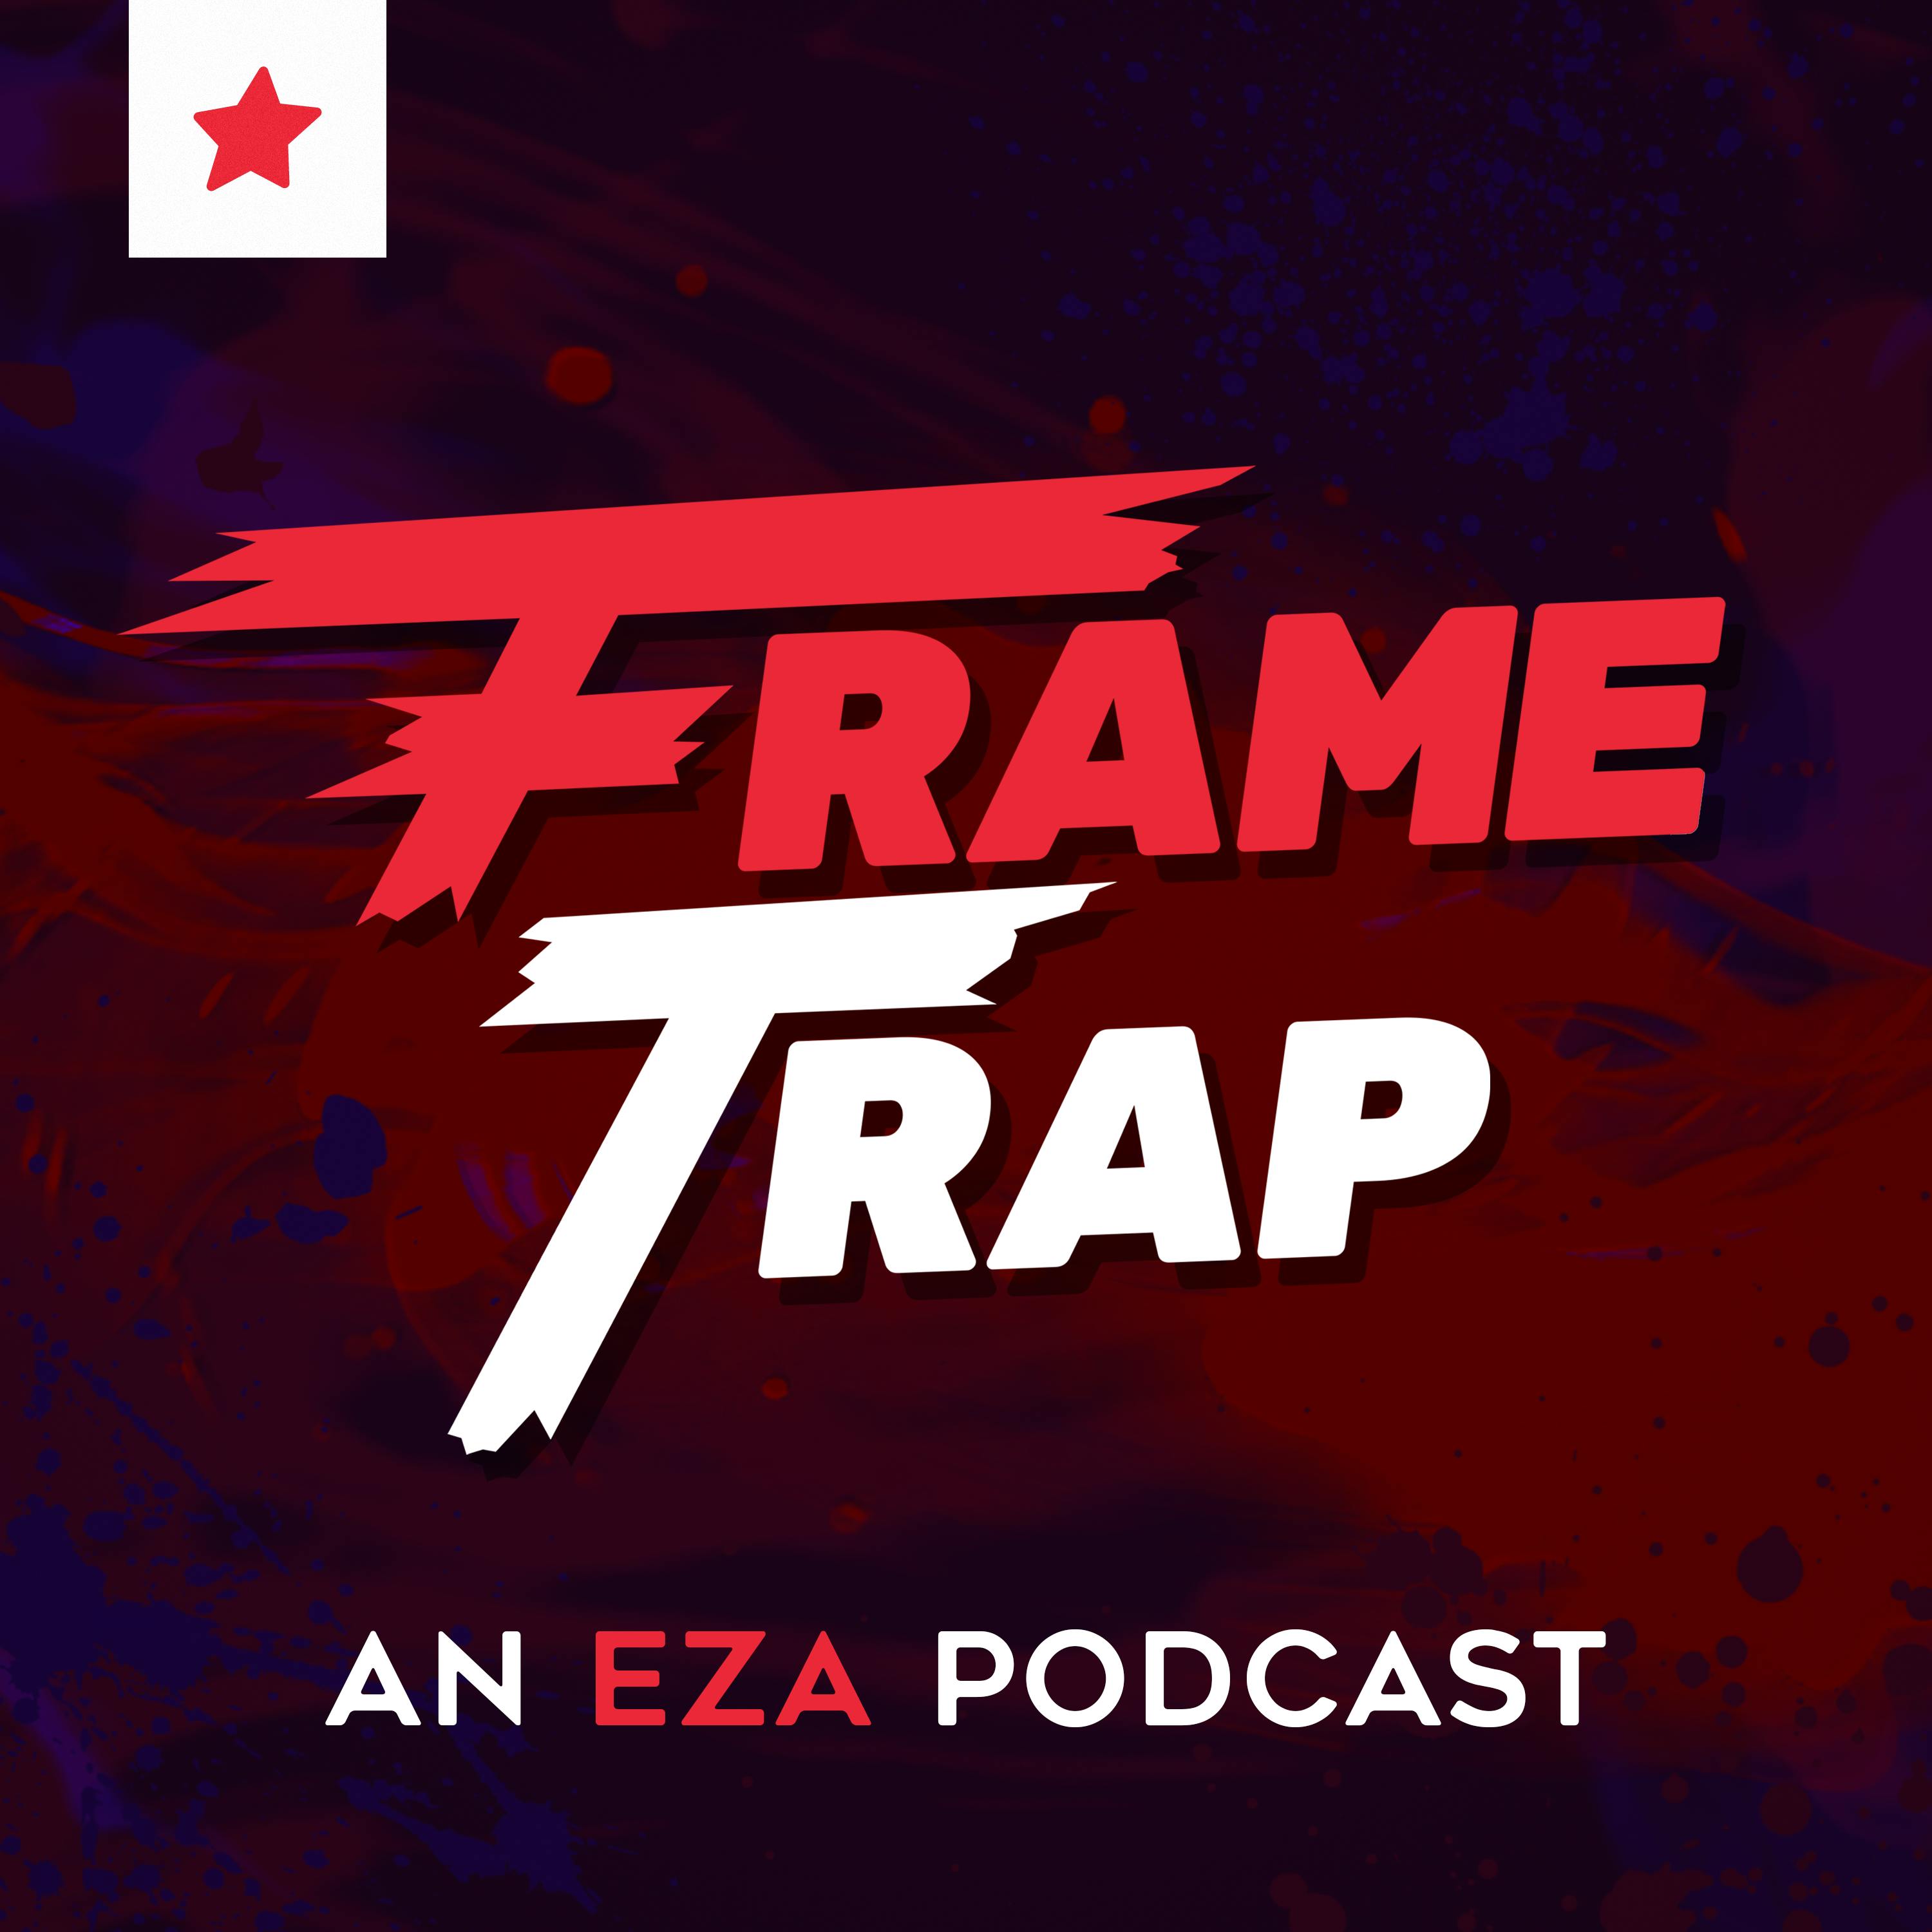 Frame - Trap Episode 183 "Gaming Tidal Wave"